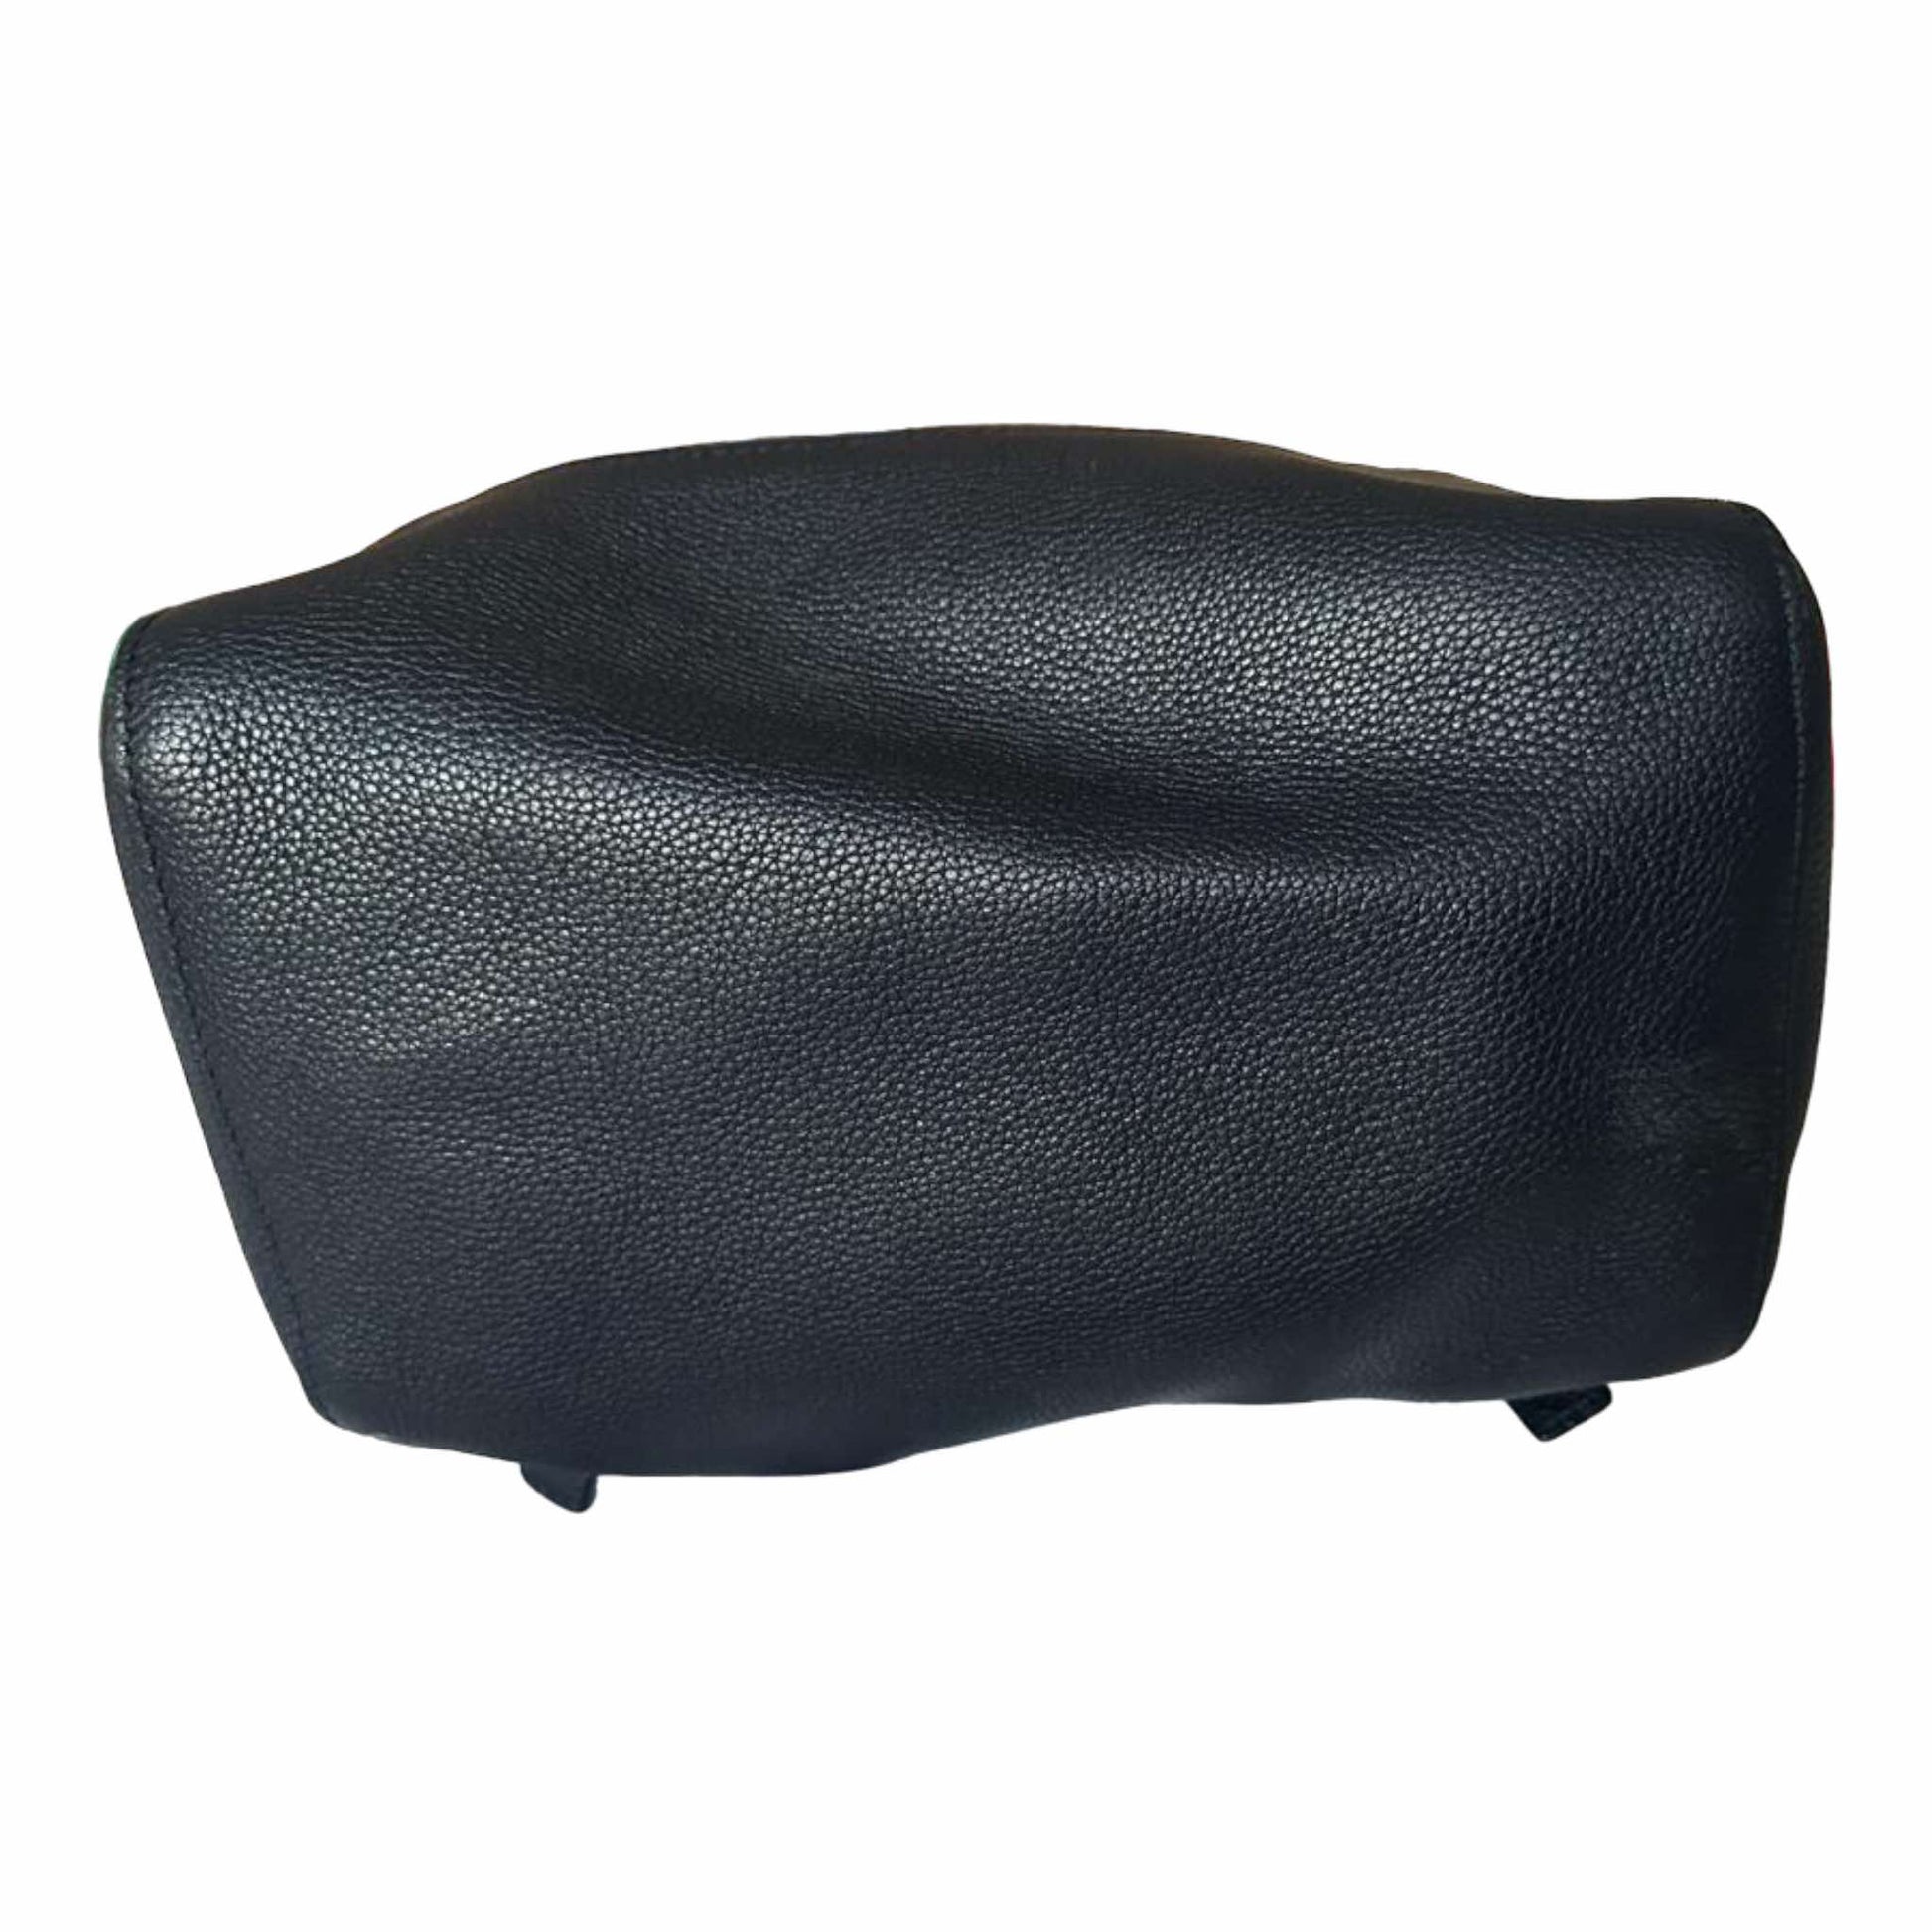 Prada Black Leather Backpack - 1BZ007